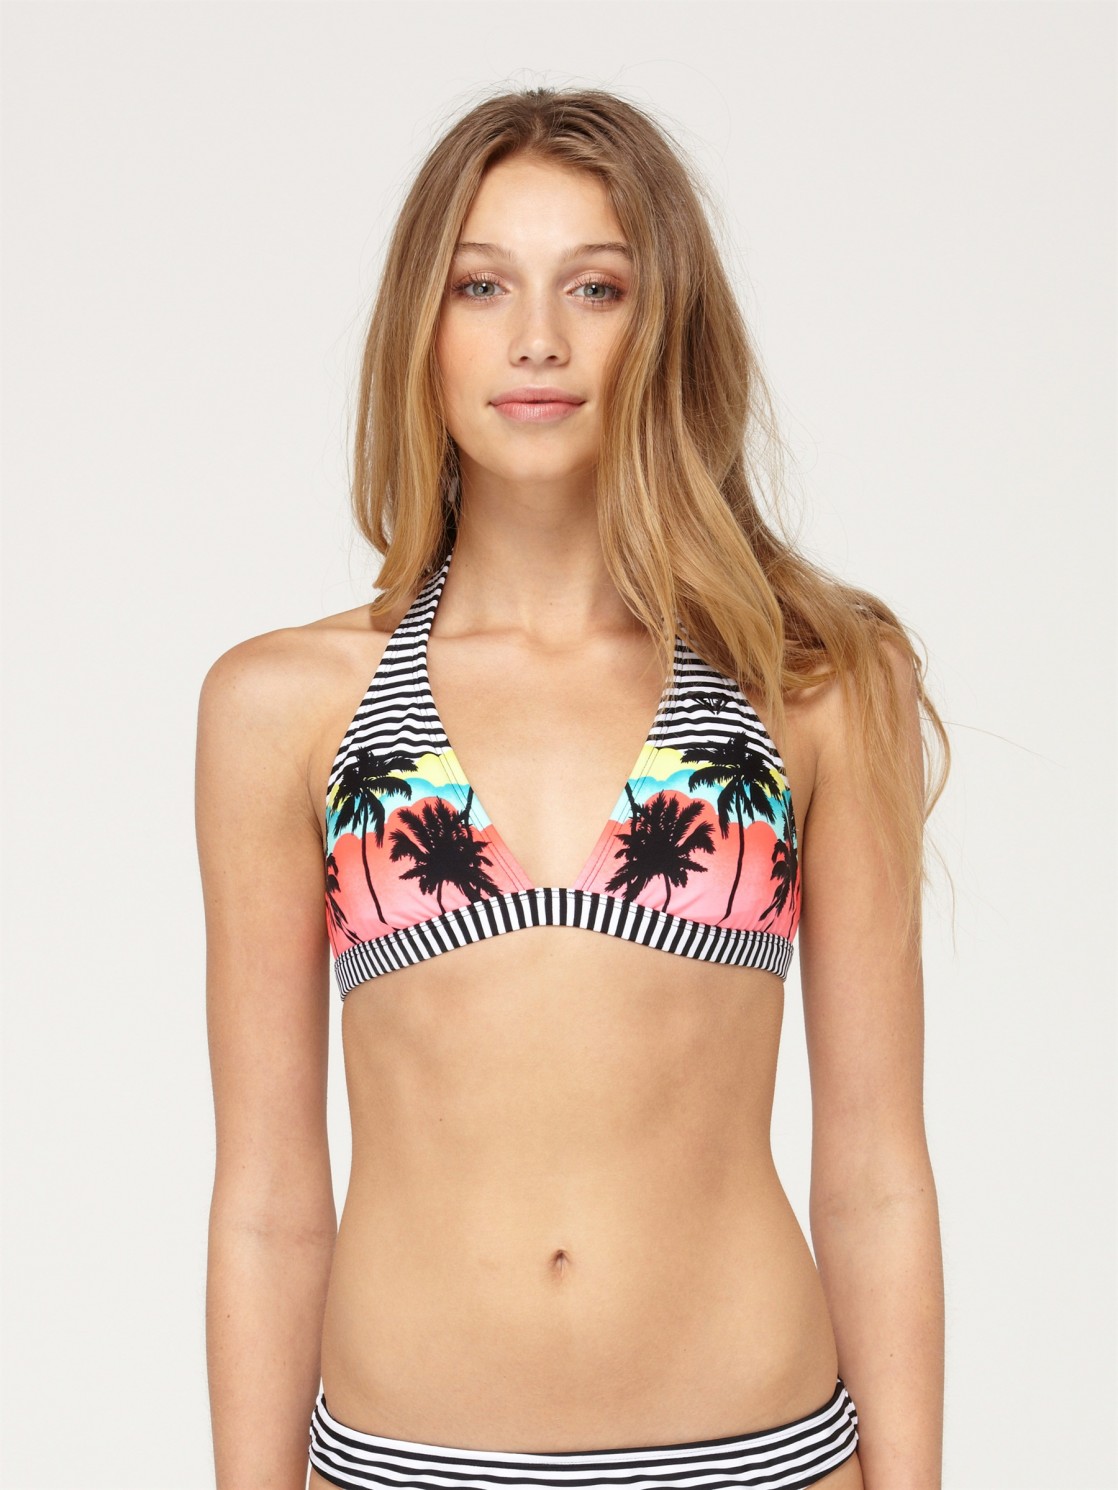 Hawaiin style halter bikini tops